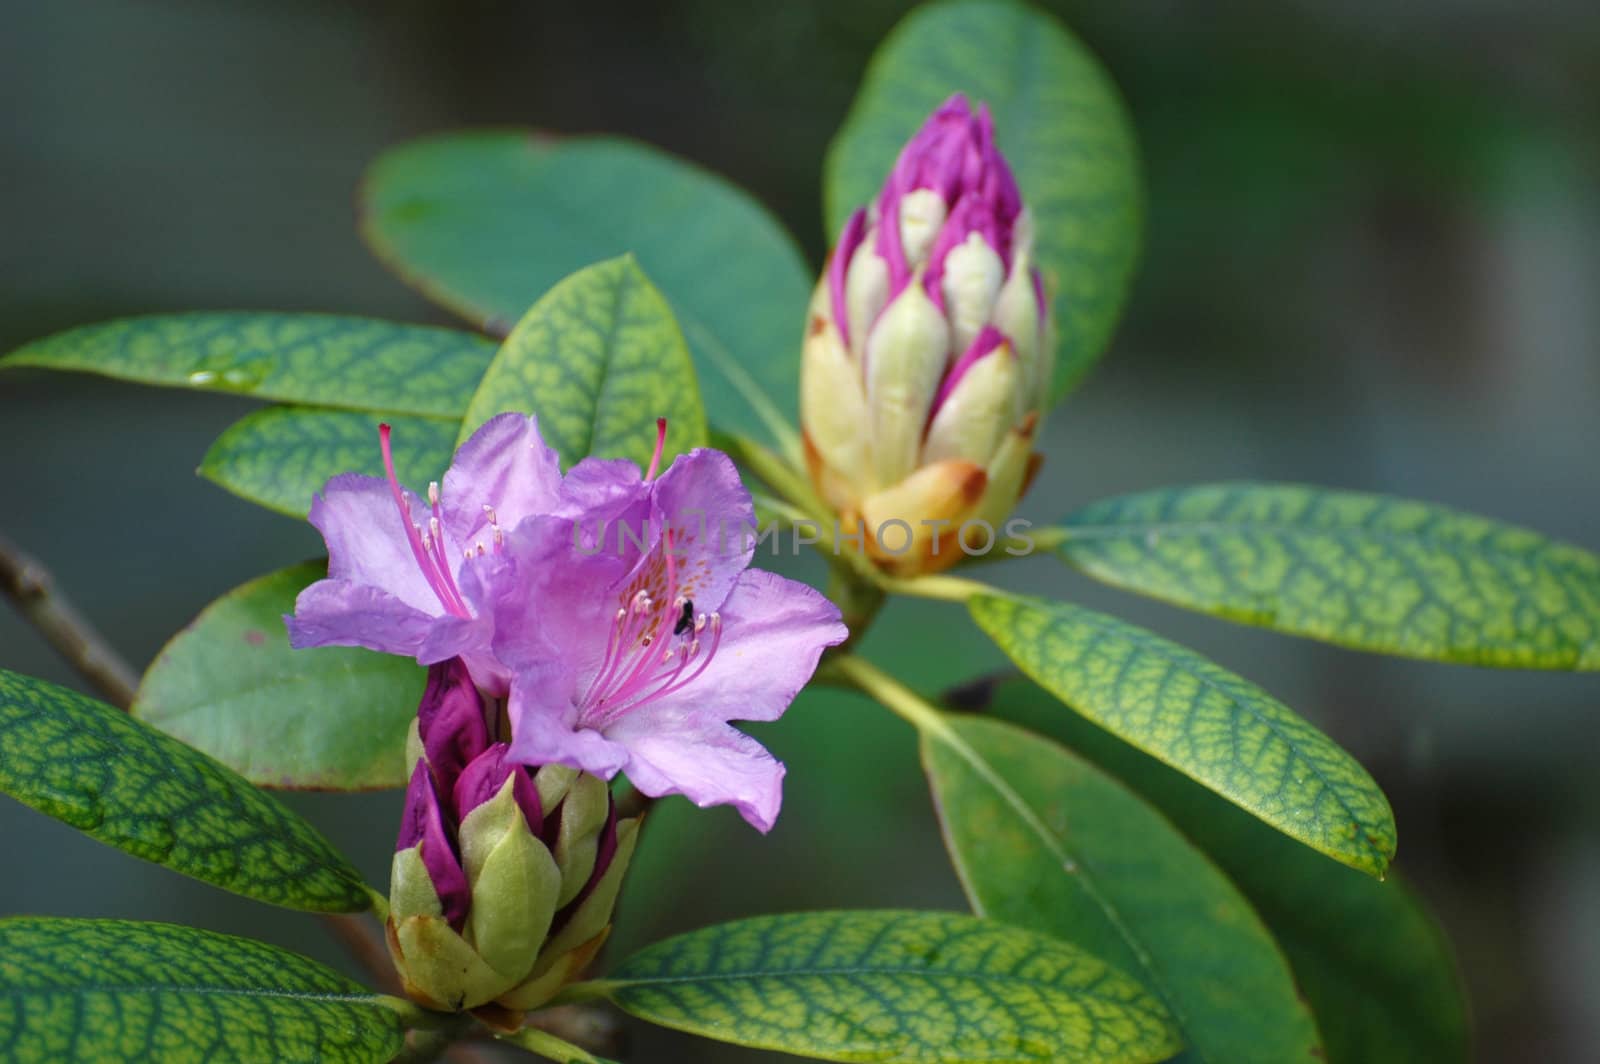 Rhododendron by ljusnan69